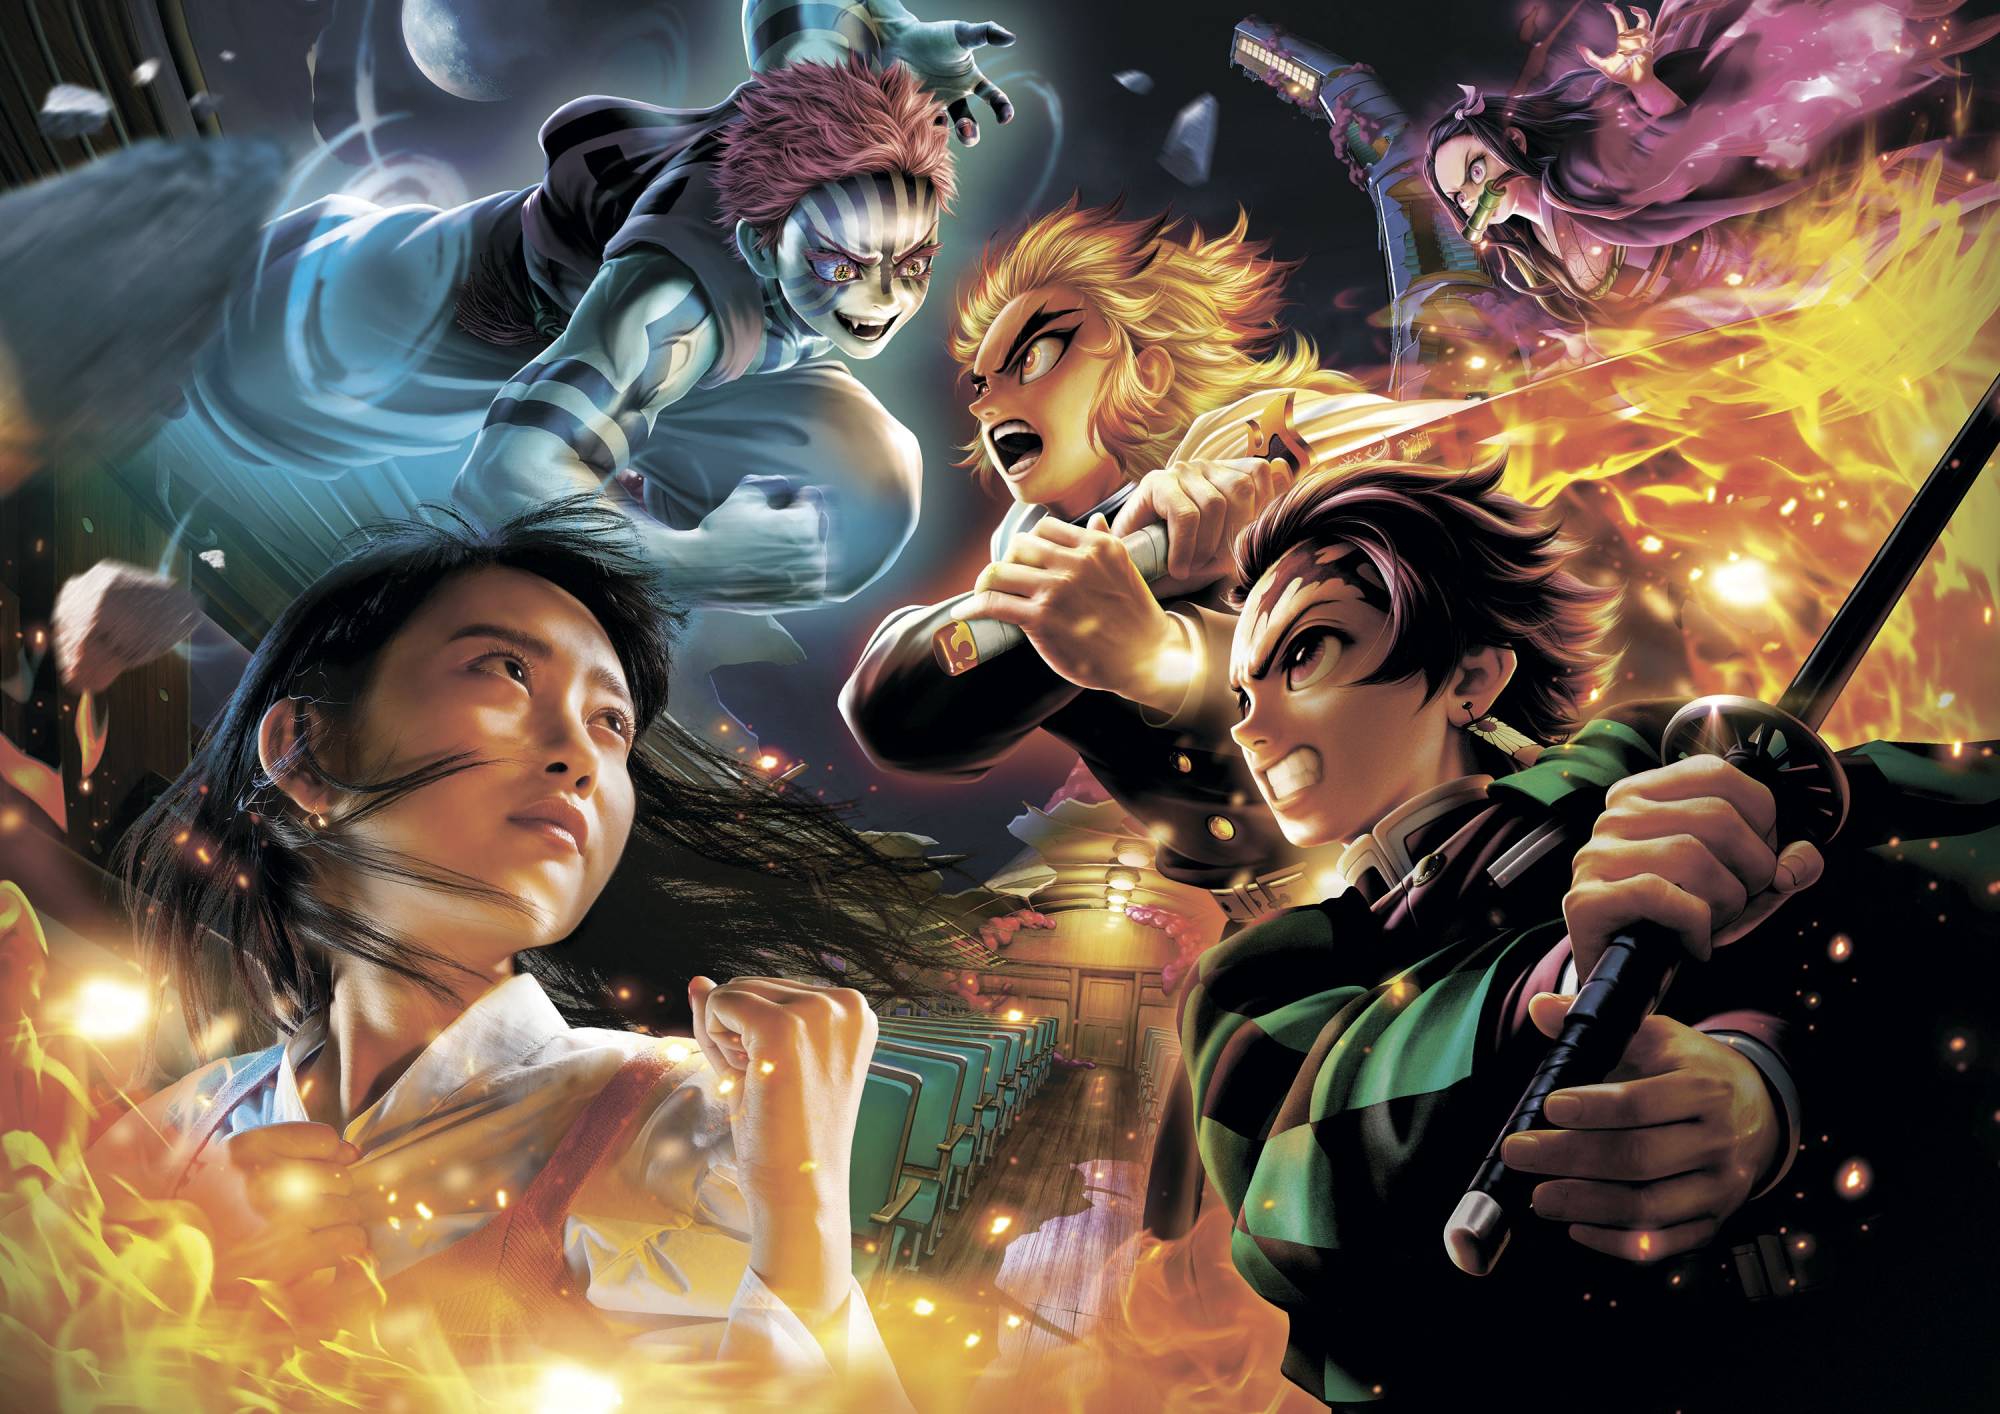 Fire Force: why did the anime change studios ahead of Season 3?